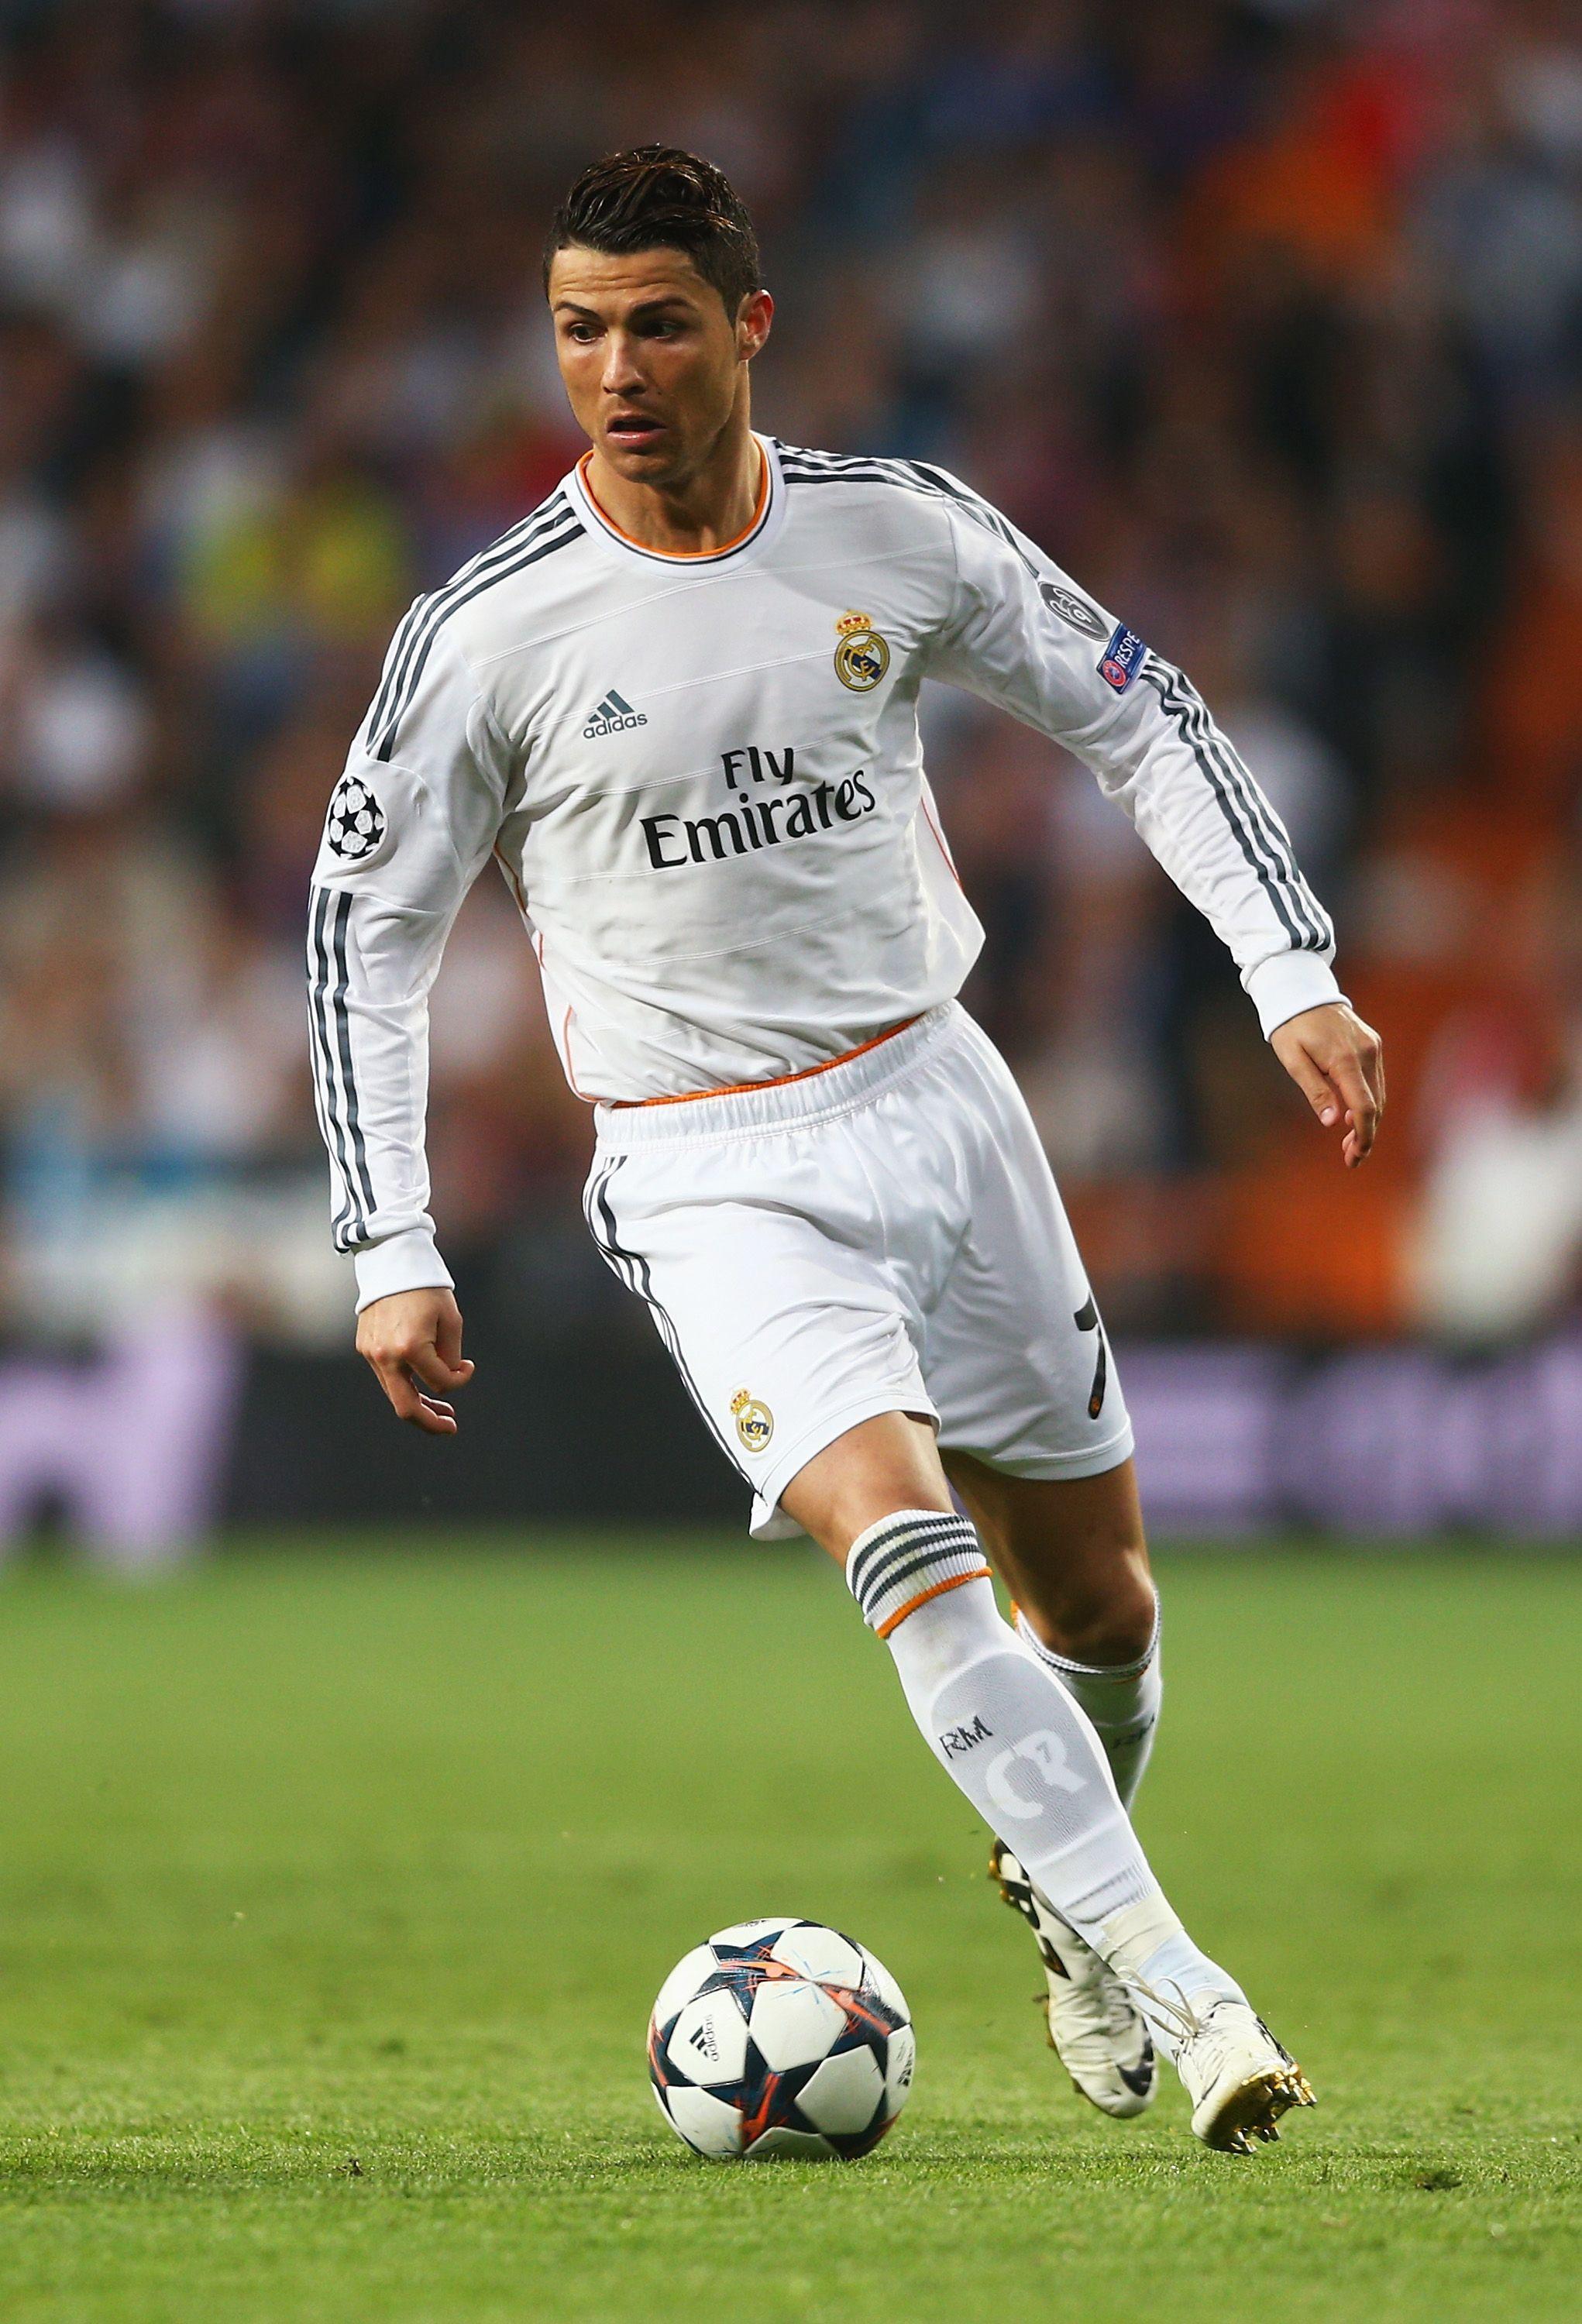 Ronaldo HD Wallpaper Free Download, Free Stock Wallpaper